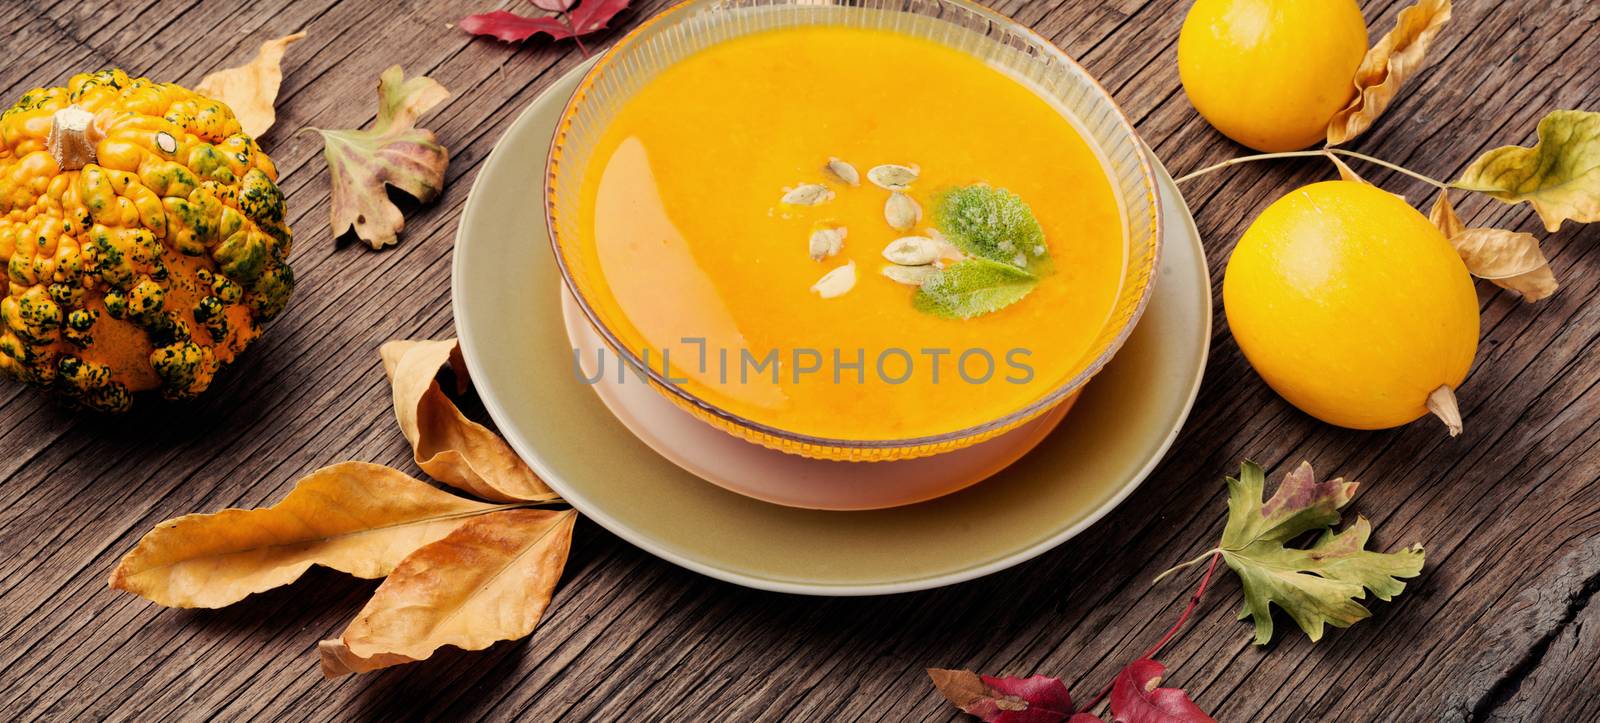 Autumn squash soup by LMykola